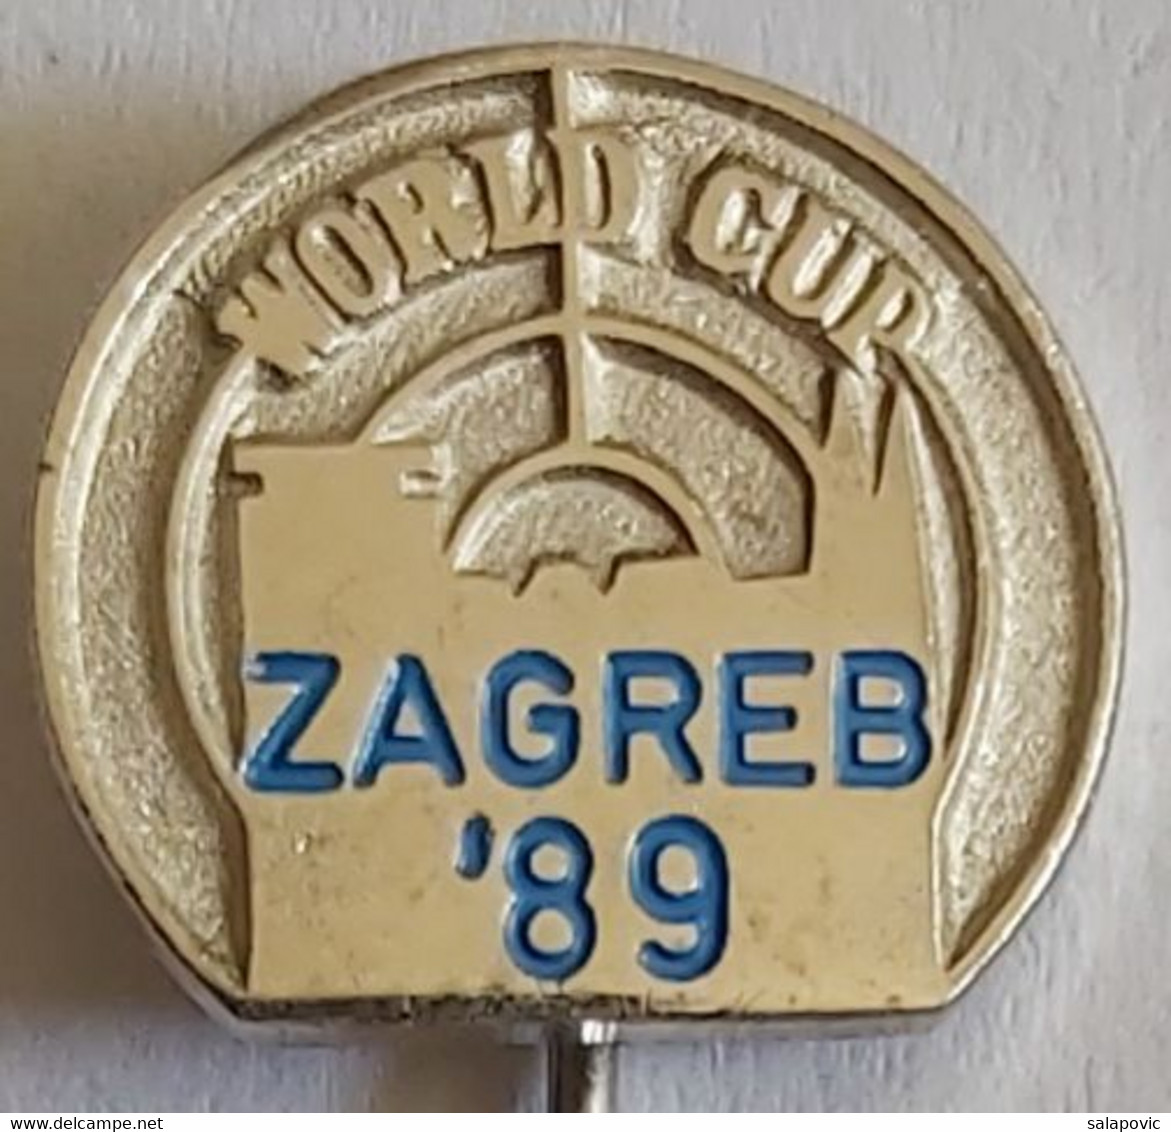 Shooting Weapons World Cup Yugoslavia Croatia Zagreb 1989 Archery Shooting  PIN A6/2 - Tir à L'Arc